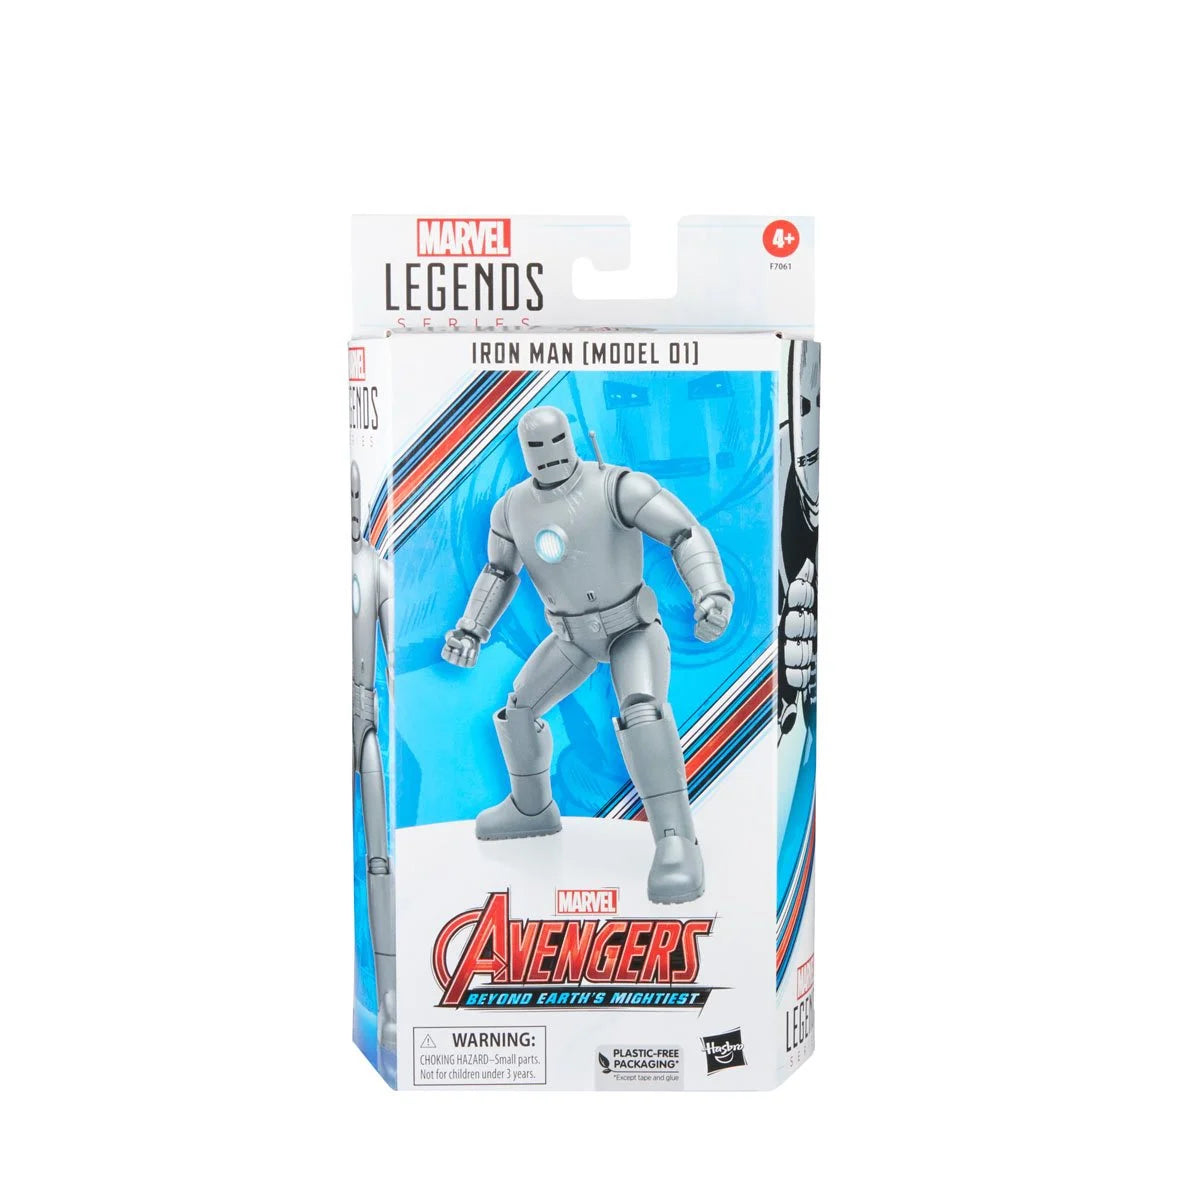 Marvel Legends Series Iron Man (Model 01) Action Figure Toy